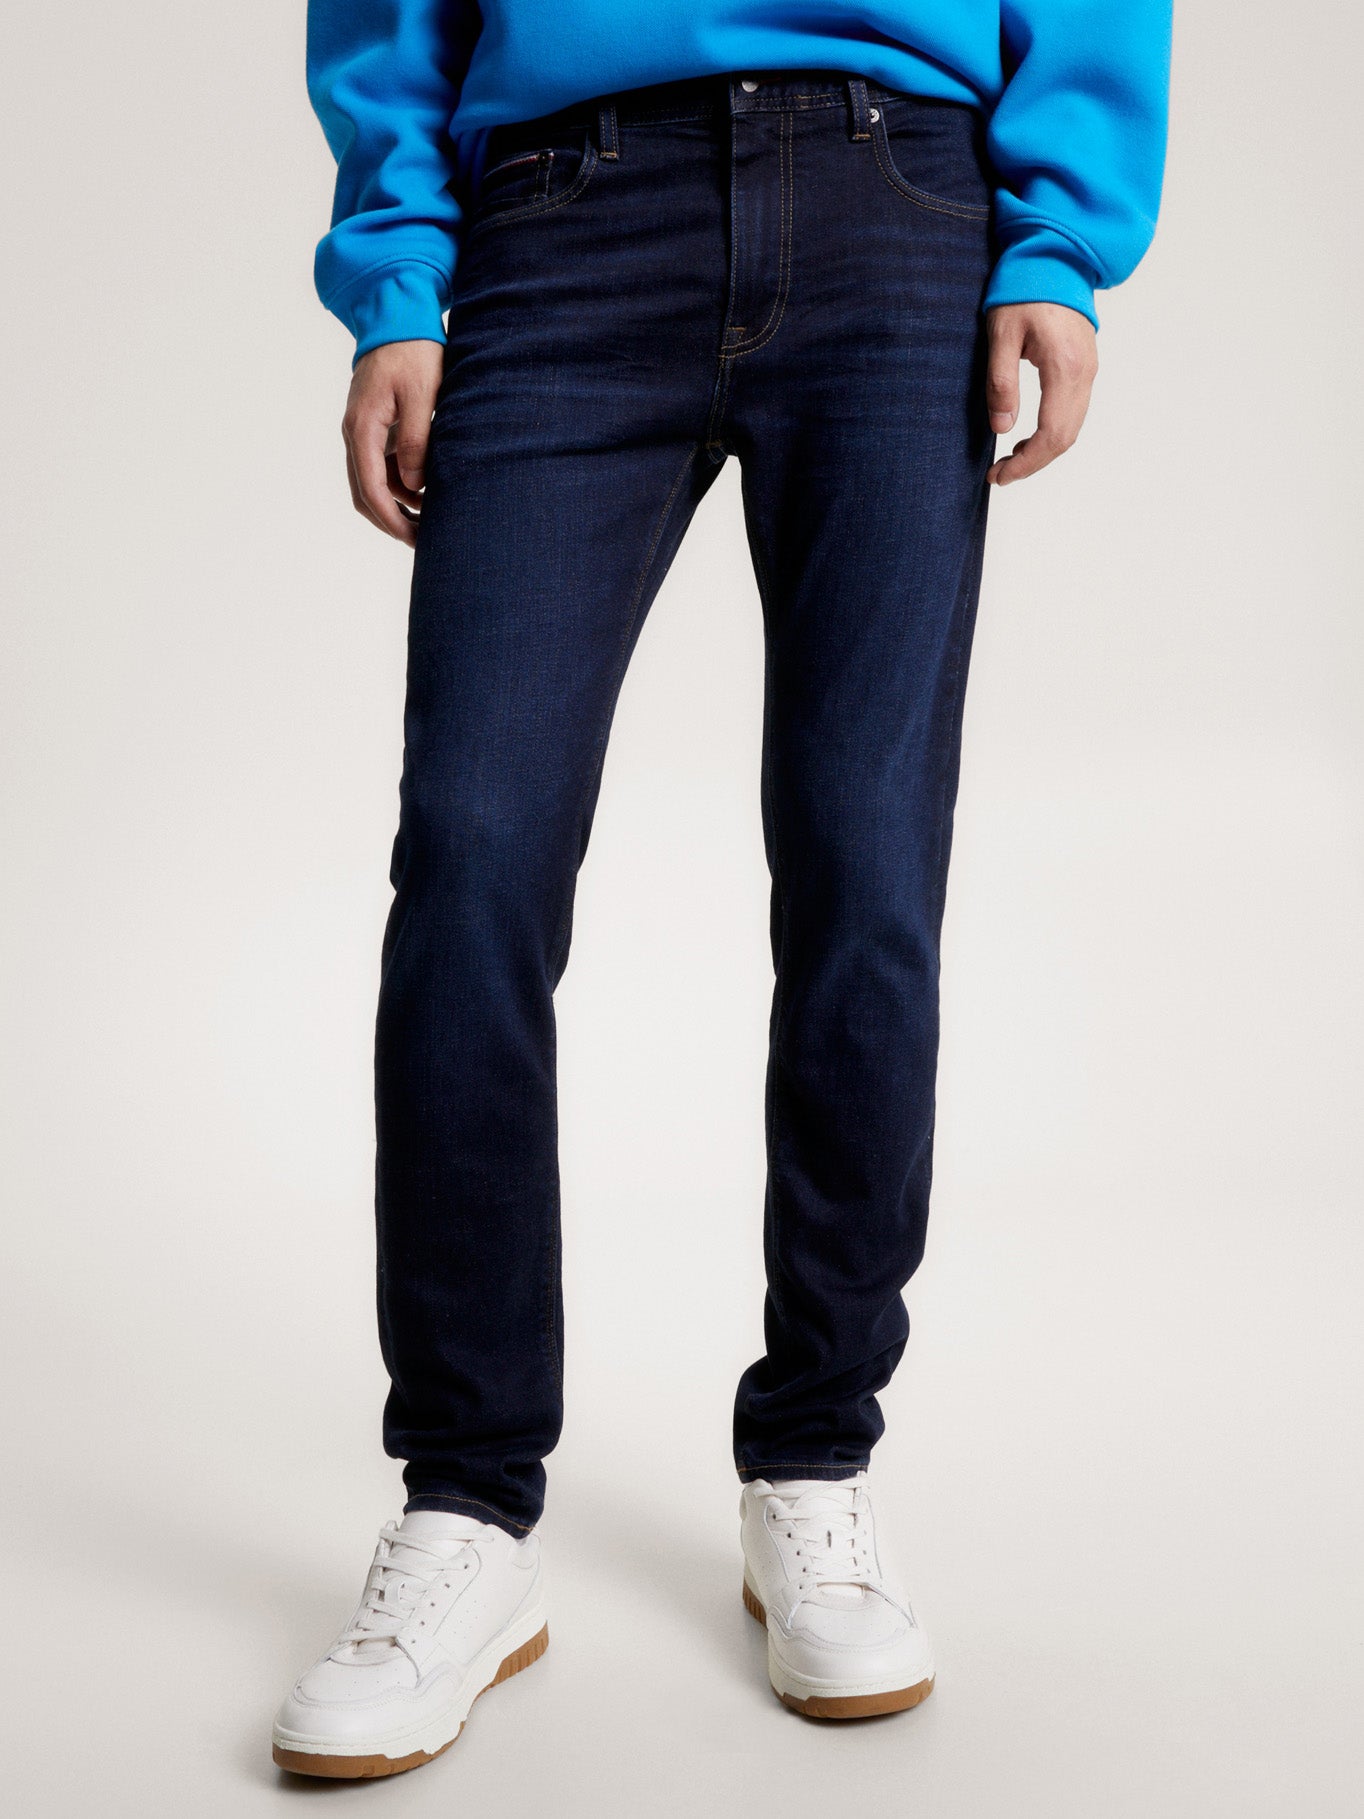 pantalones-jeans-tommy-hilfiger-p-caballeros